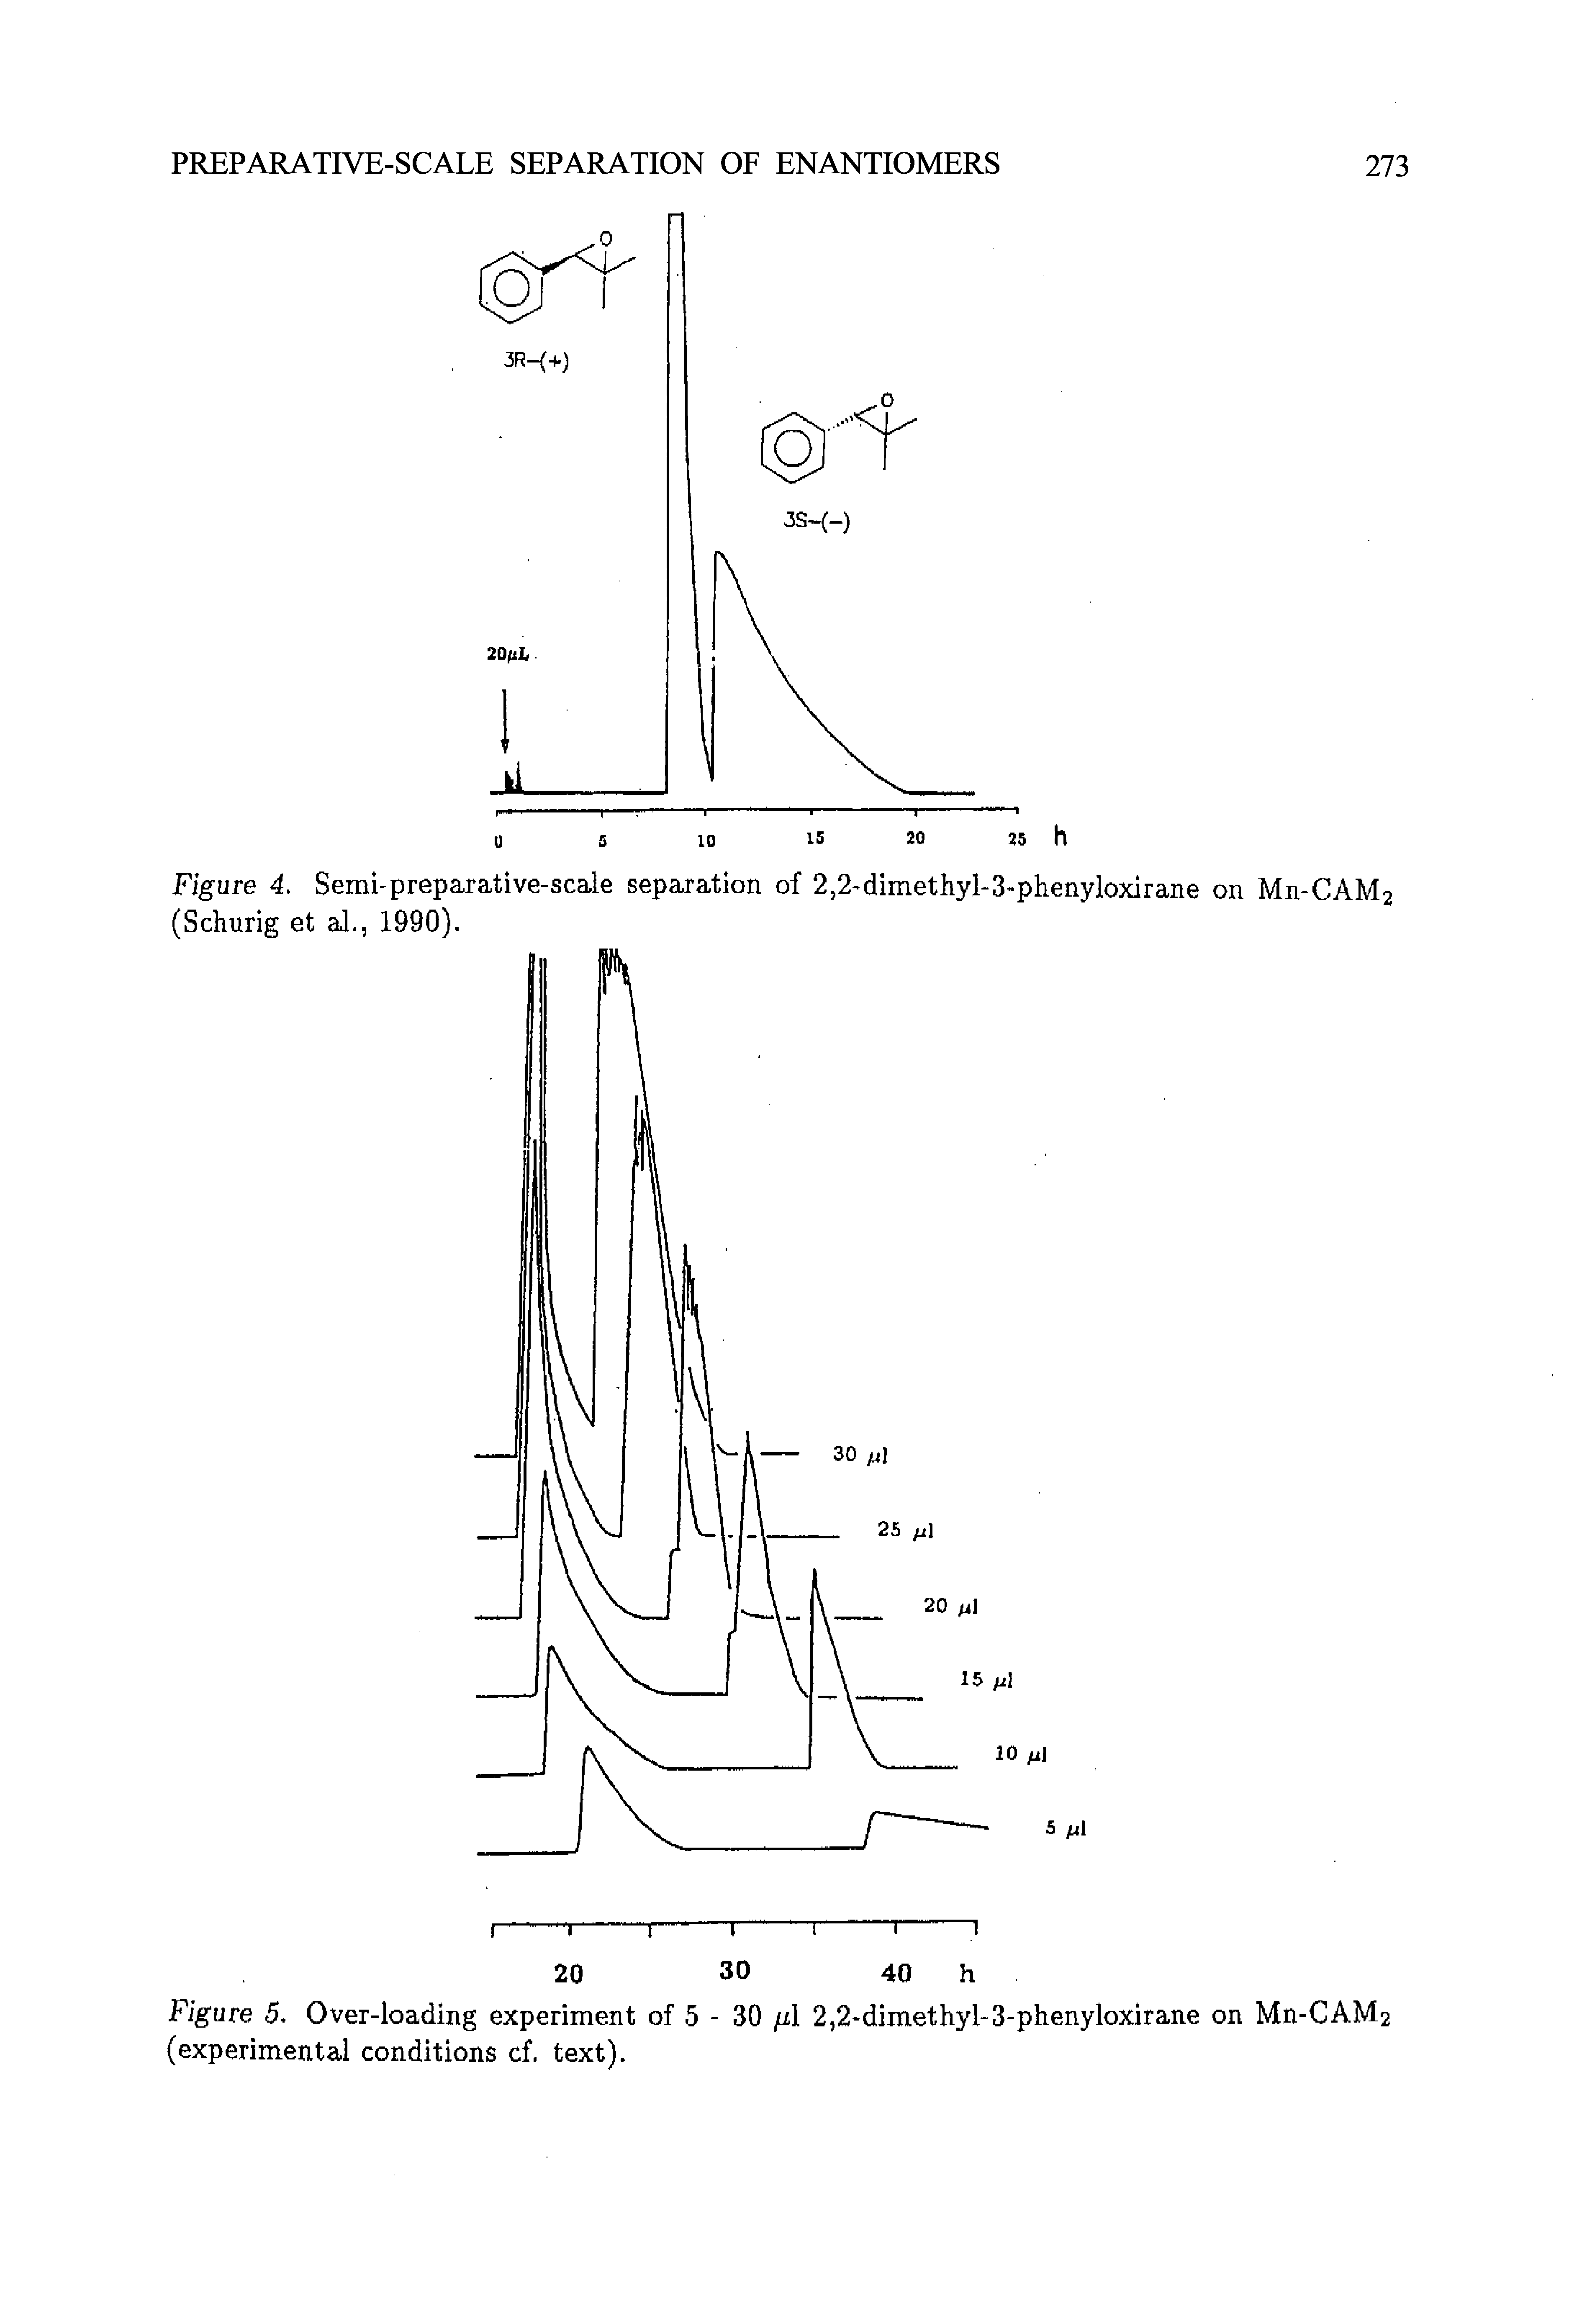 Figure 4. Semi-preparative-scale separation of 2,2-dimethyl-3-phenyloxirane on Mn-CAM2 (Schurig et ah, 1990).